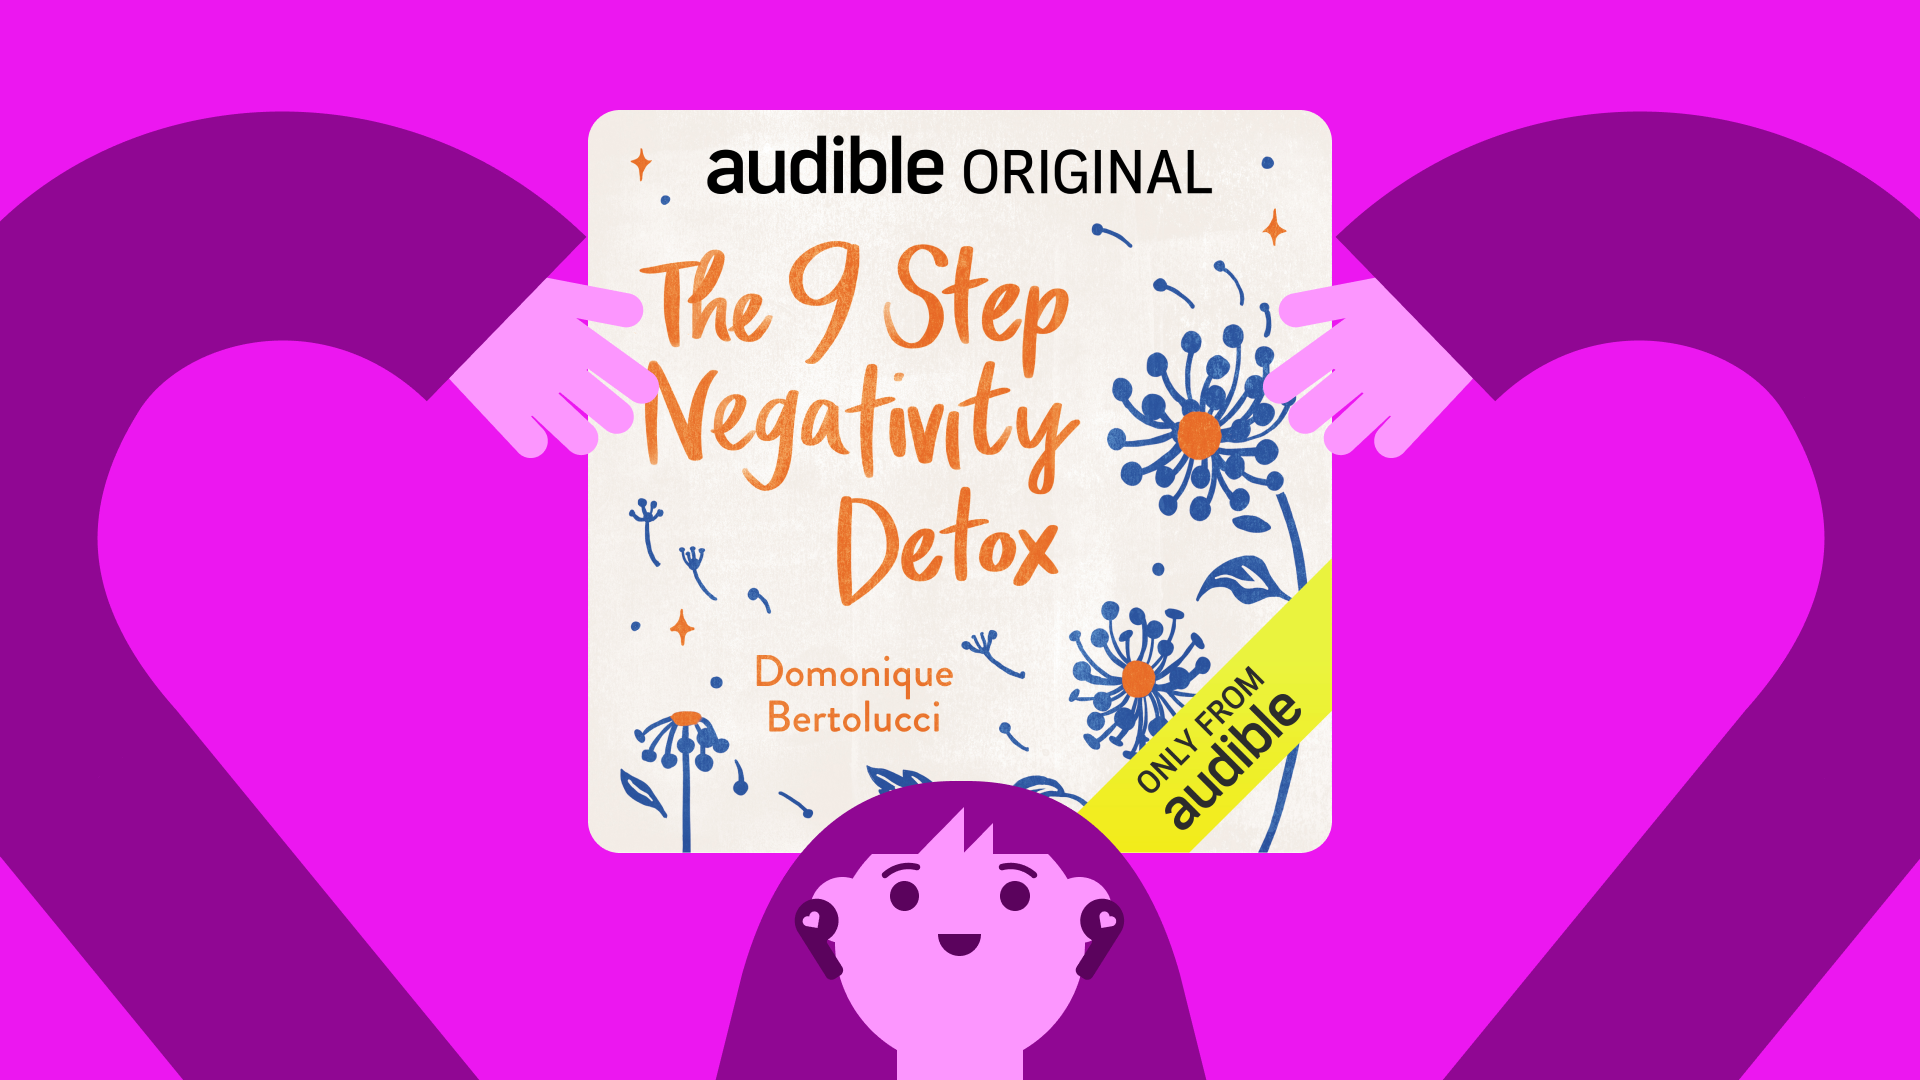 The 9 Step Negativity Detox podcast